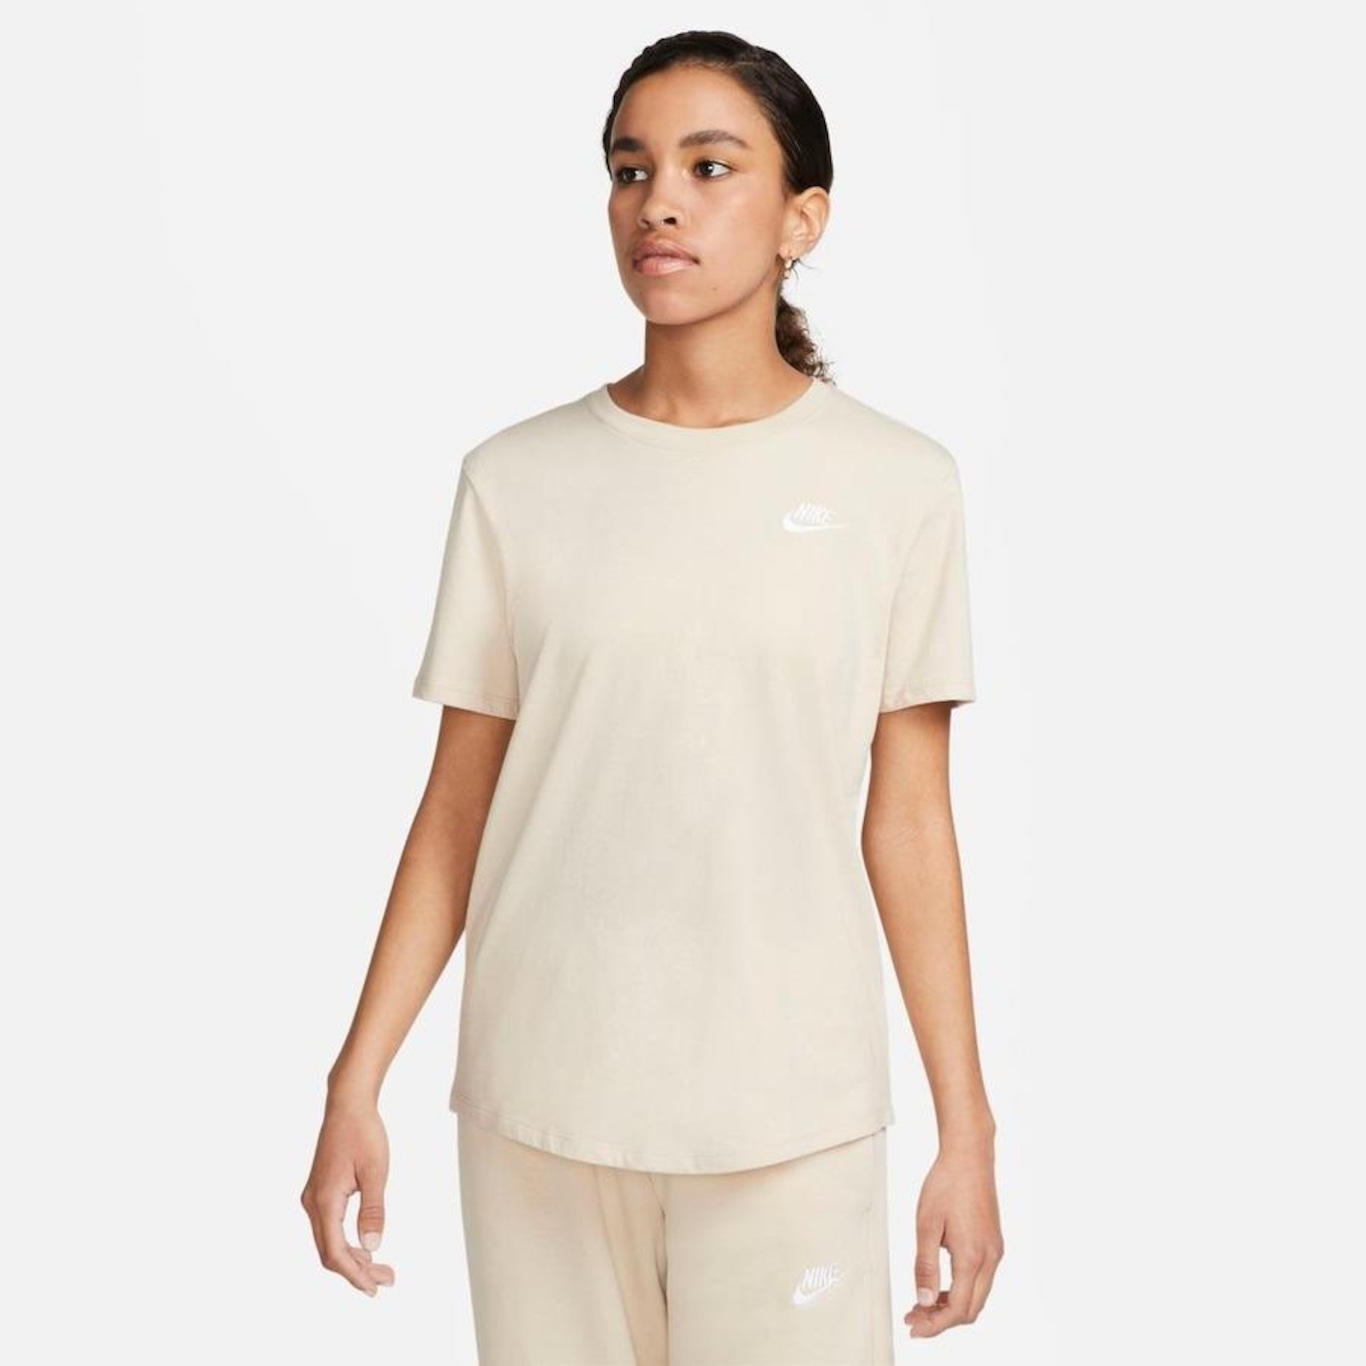 Plus Size - Camiseta Nike Sportswear Essential Futura Feminina - Nike